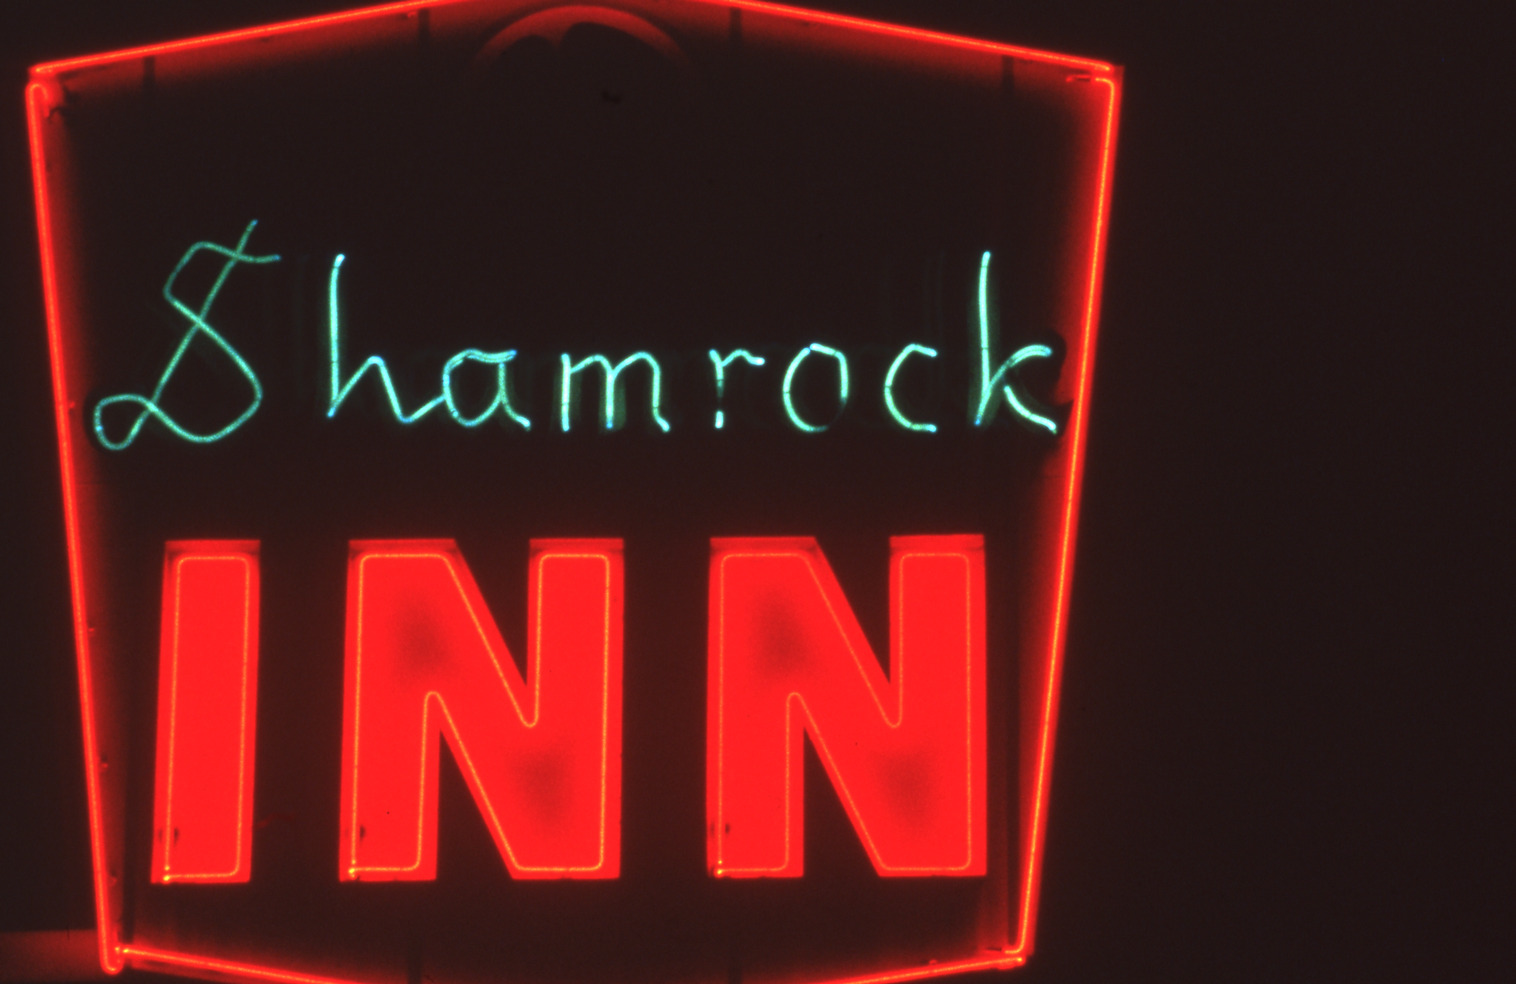 Shamrock Inn sign, Reno, Nevada: photographic print